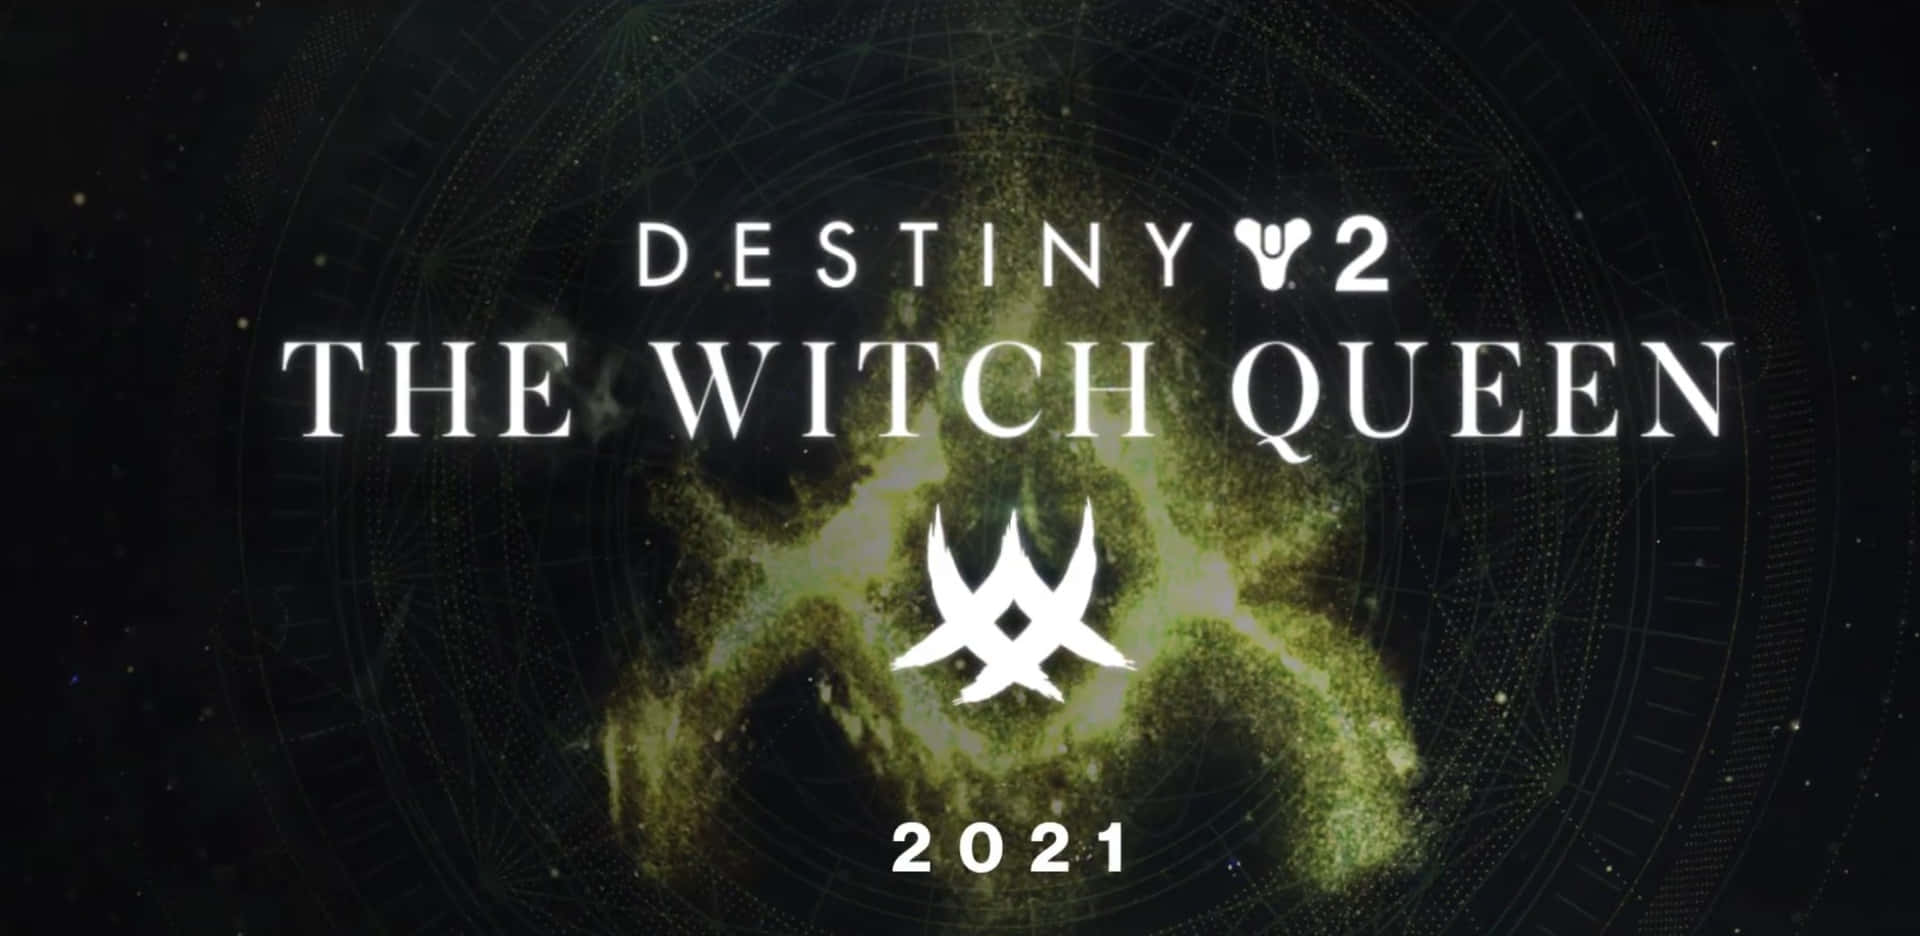 Destiny 2 The Witch Queen 2021 Wallpaper Wallpaper